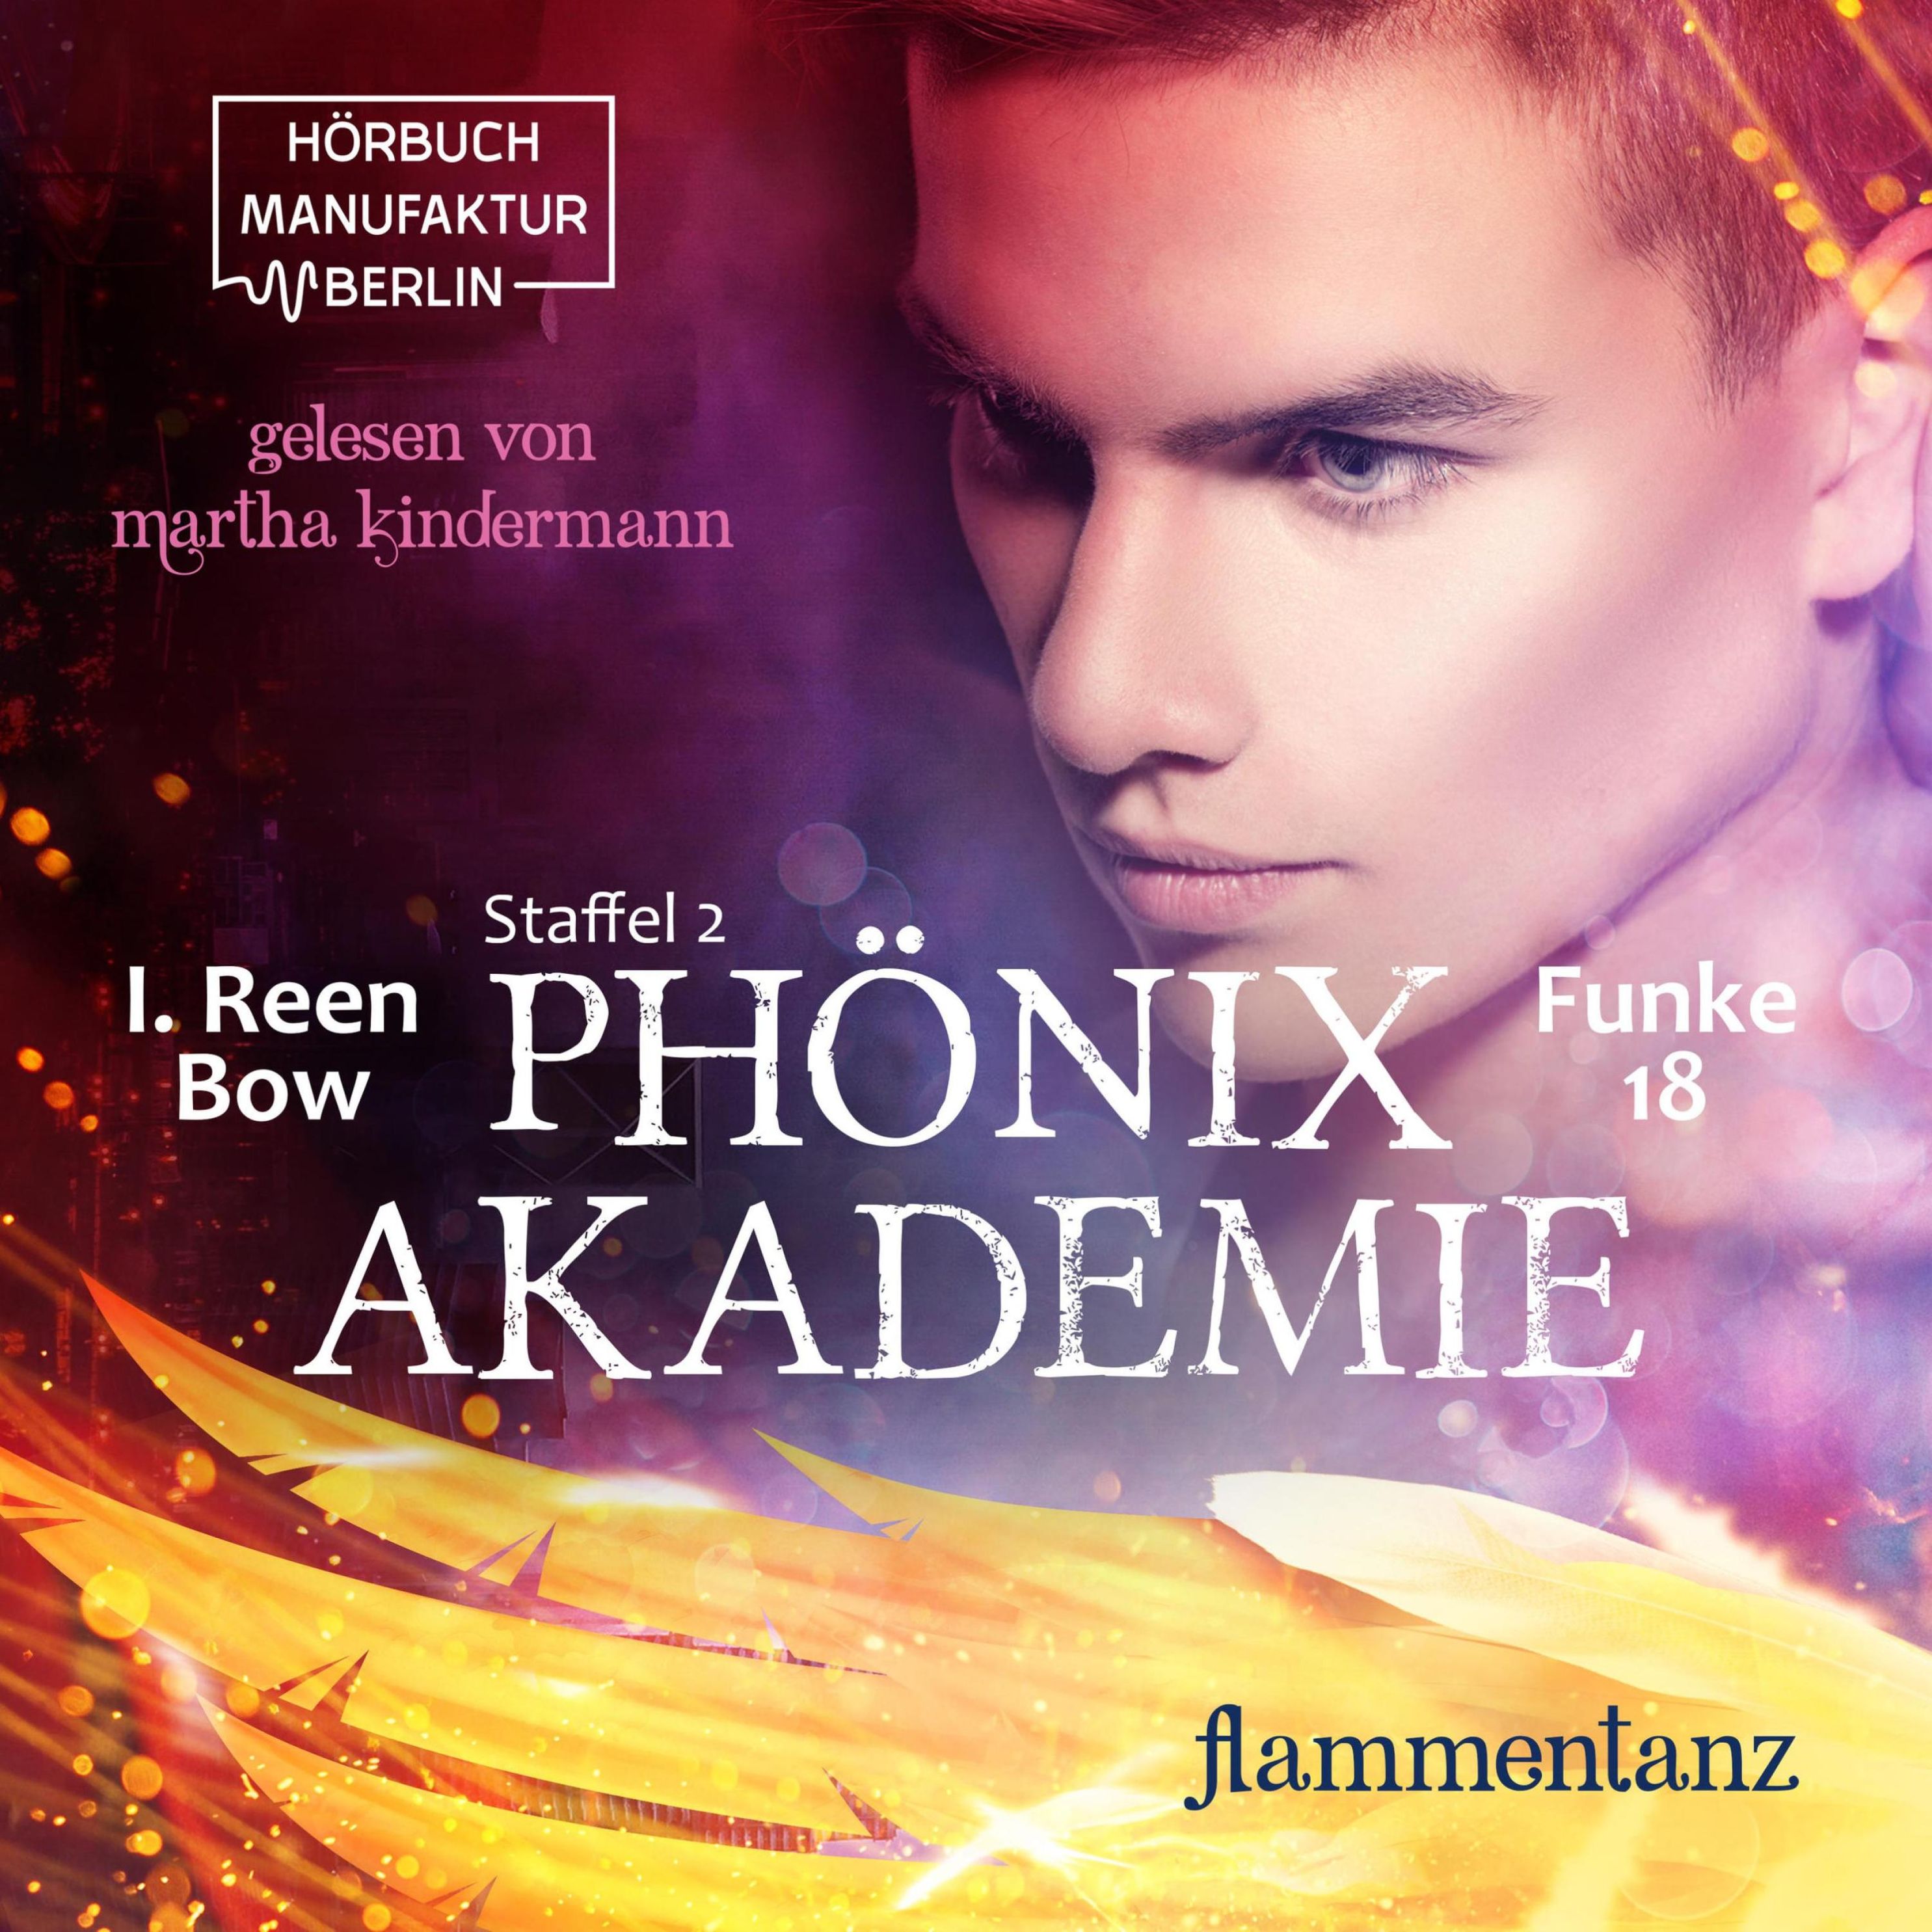 Phönixakademie - 18 - Flammentanz Hörbuch Download | Weltbild